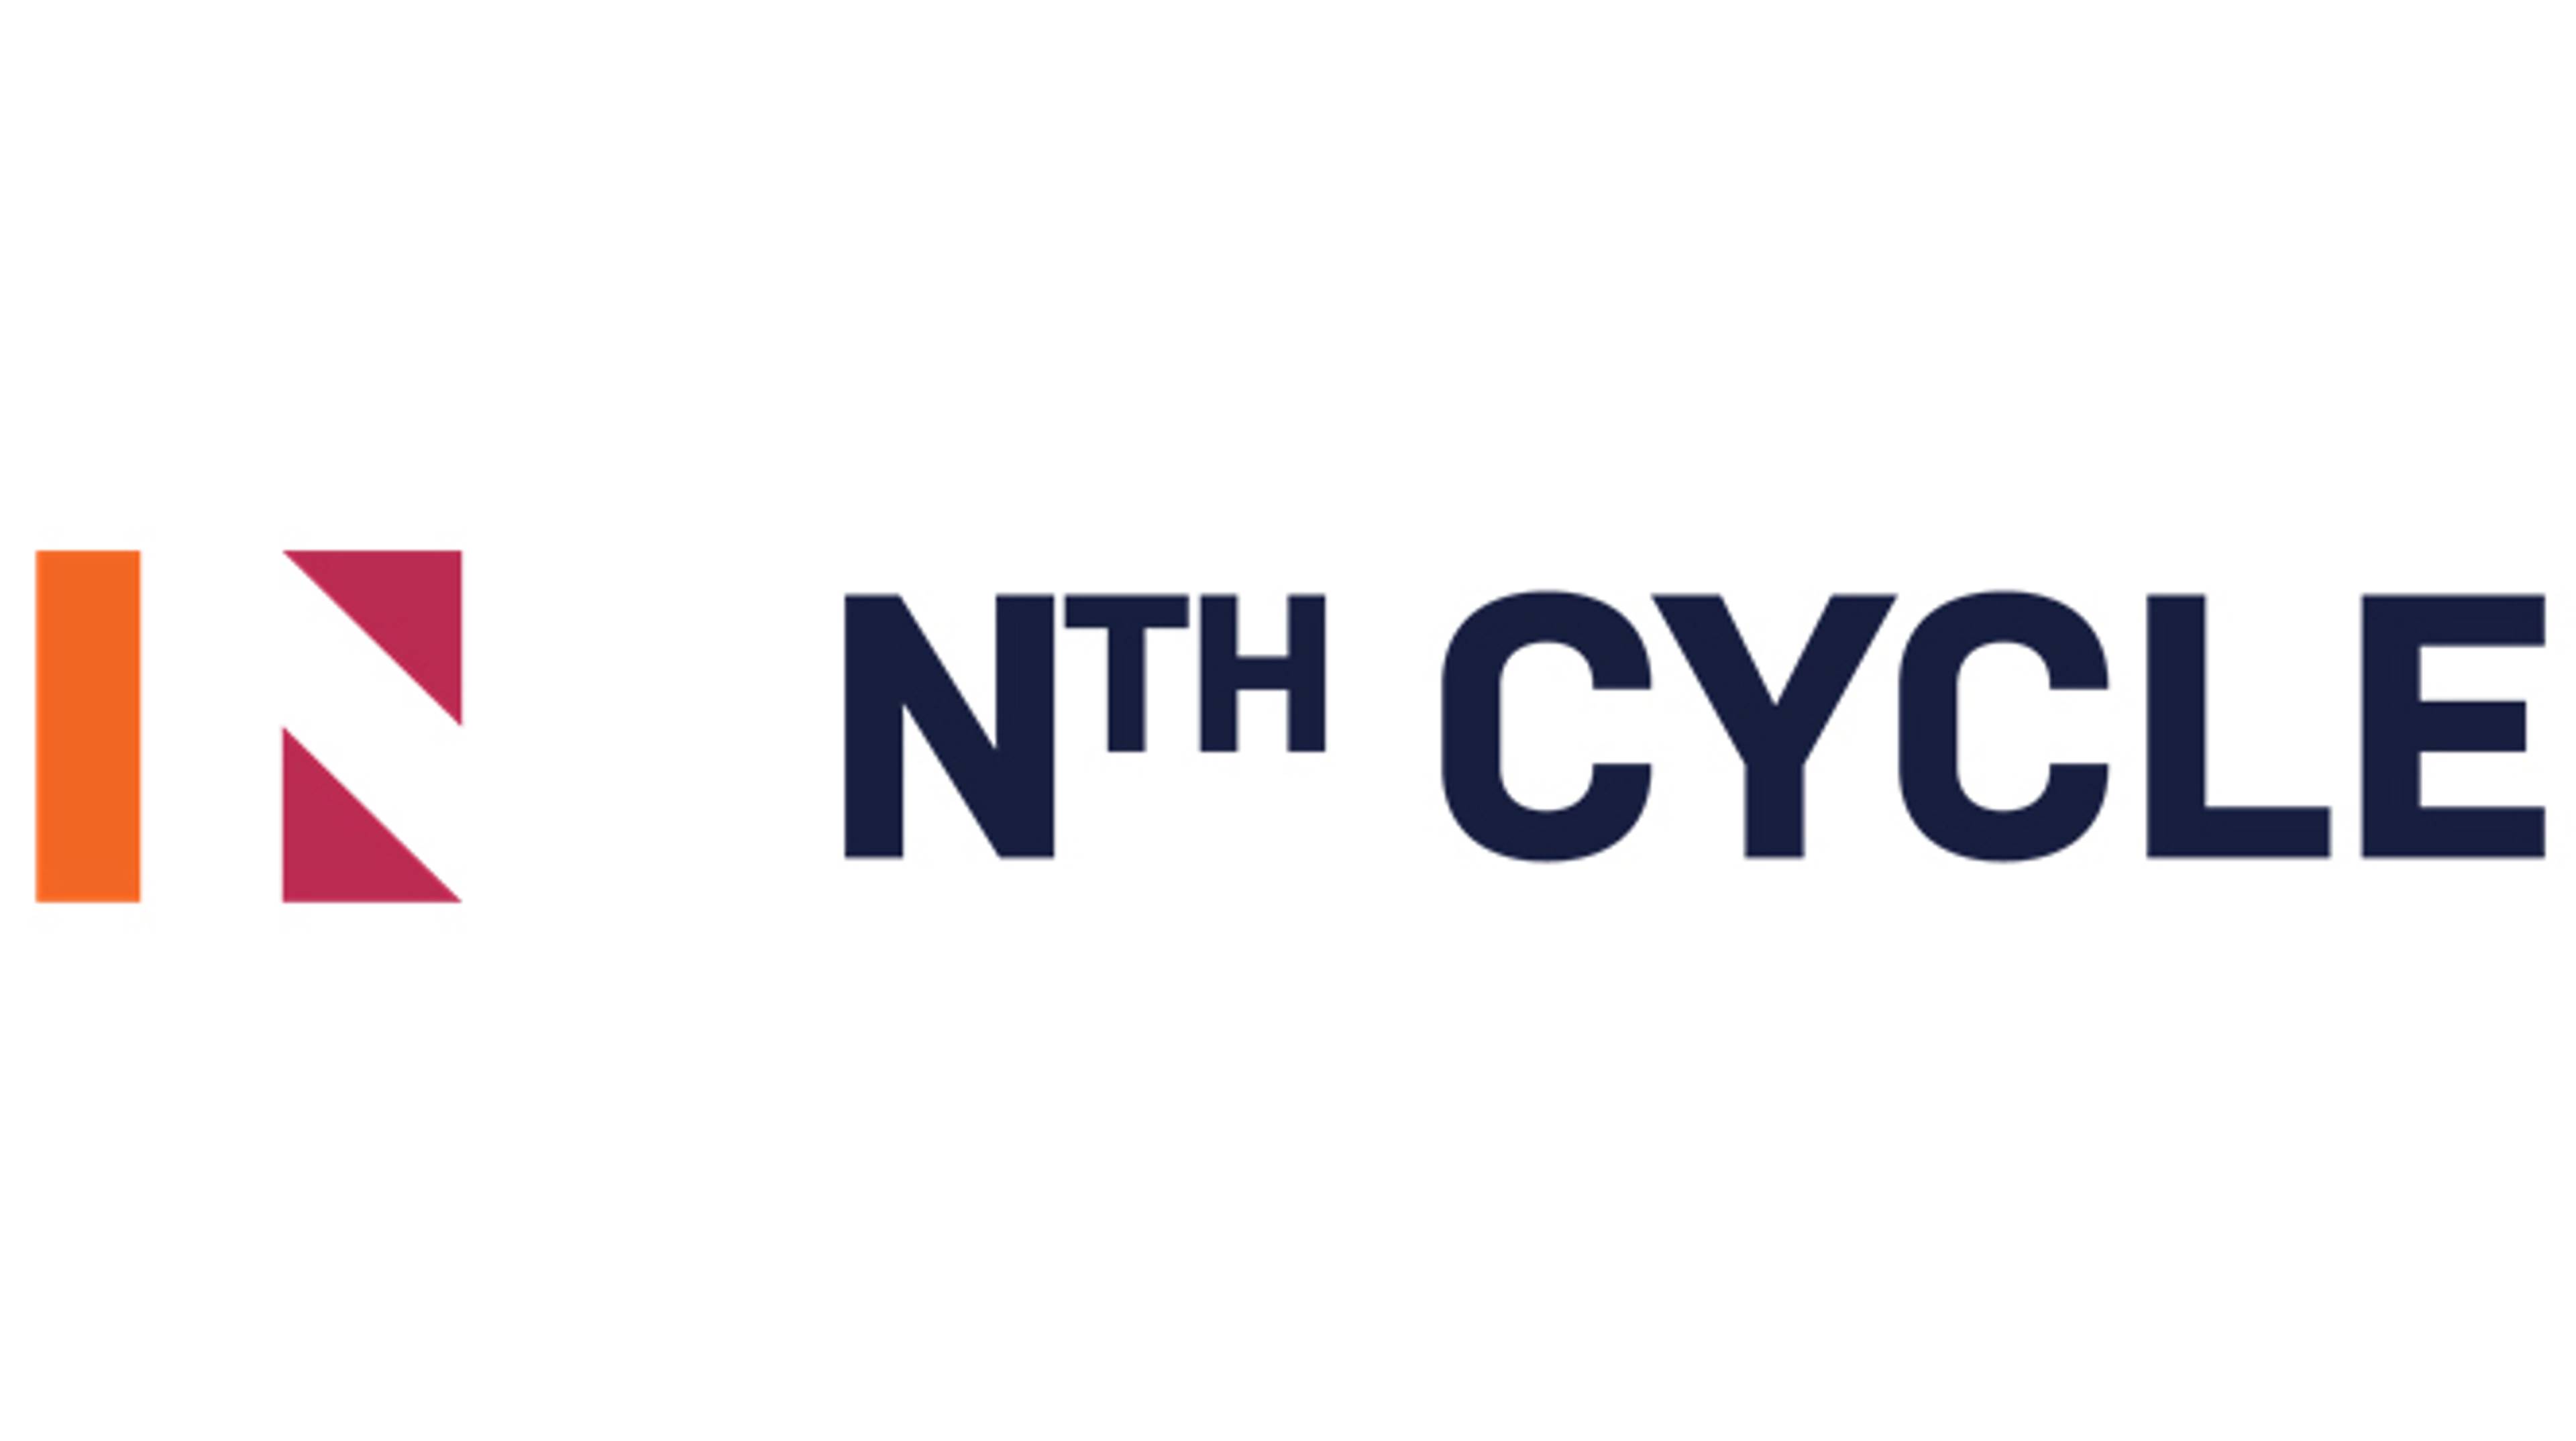 Nth cycle logo